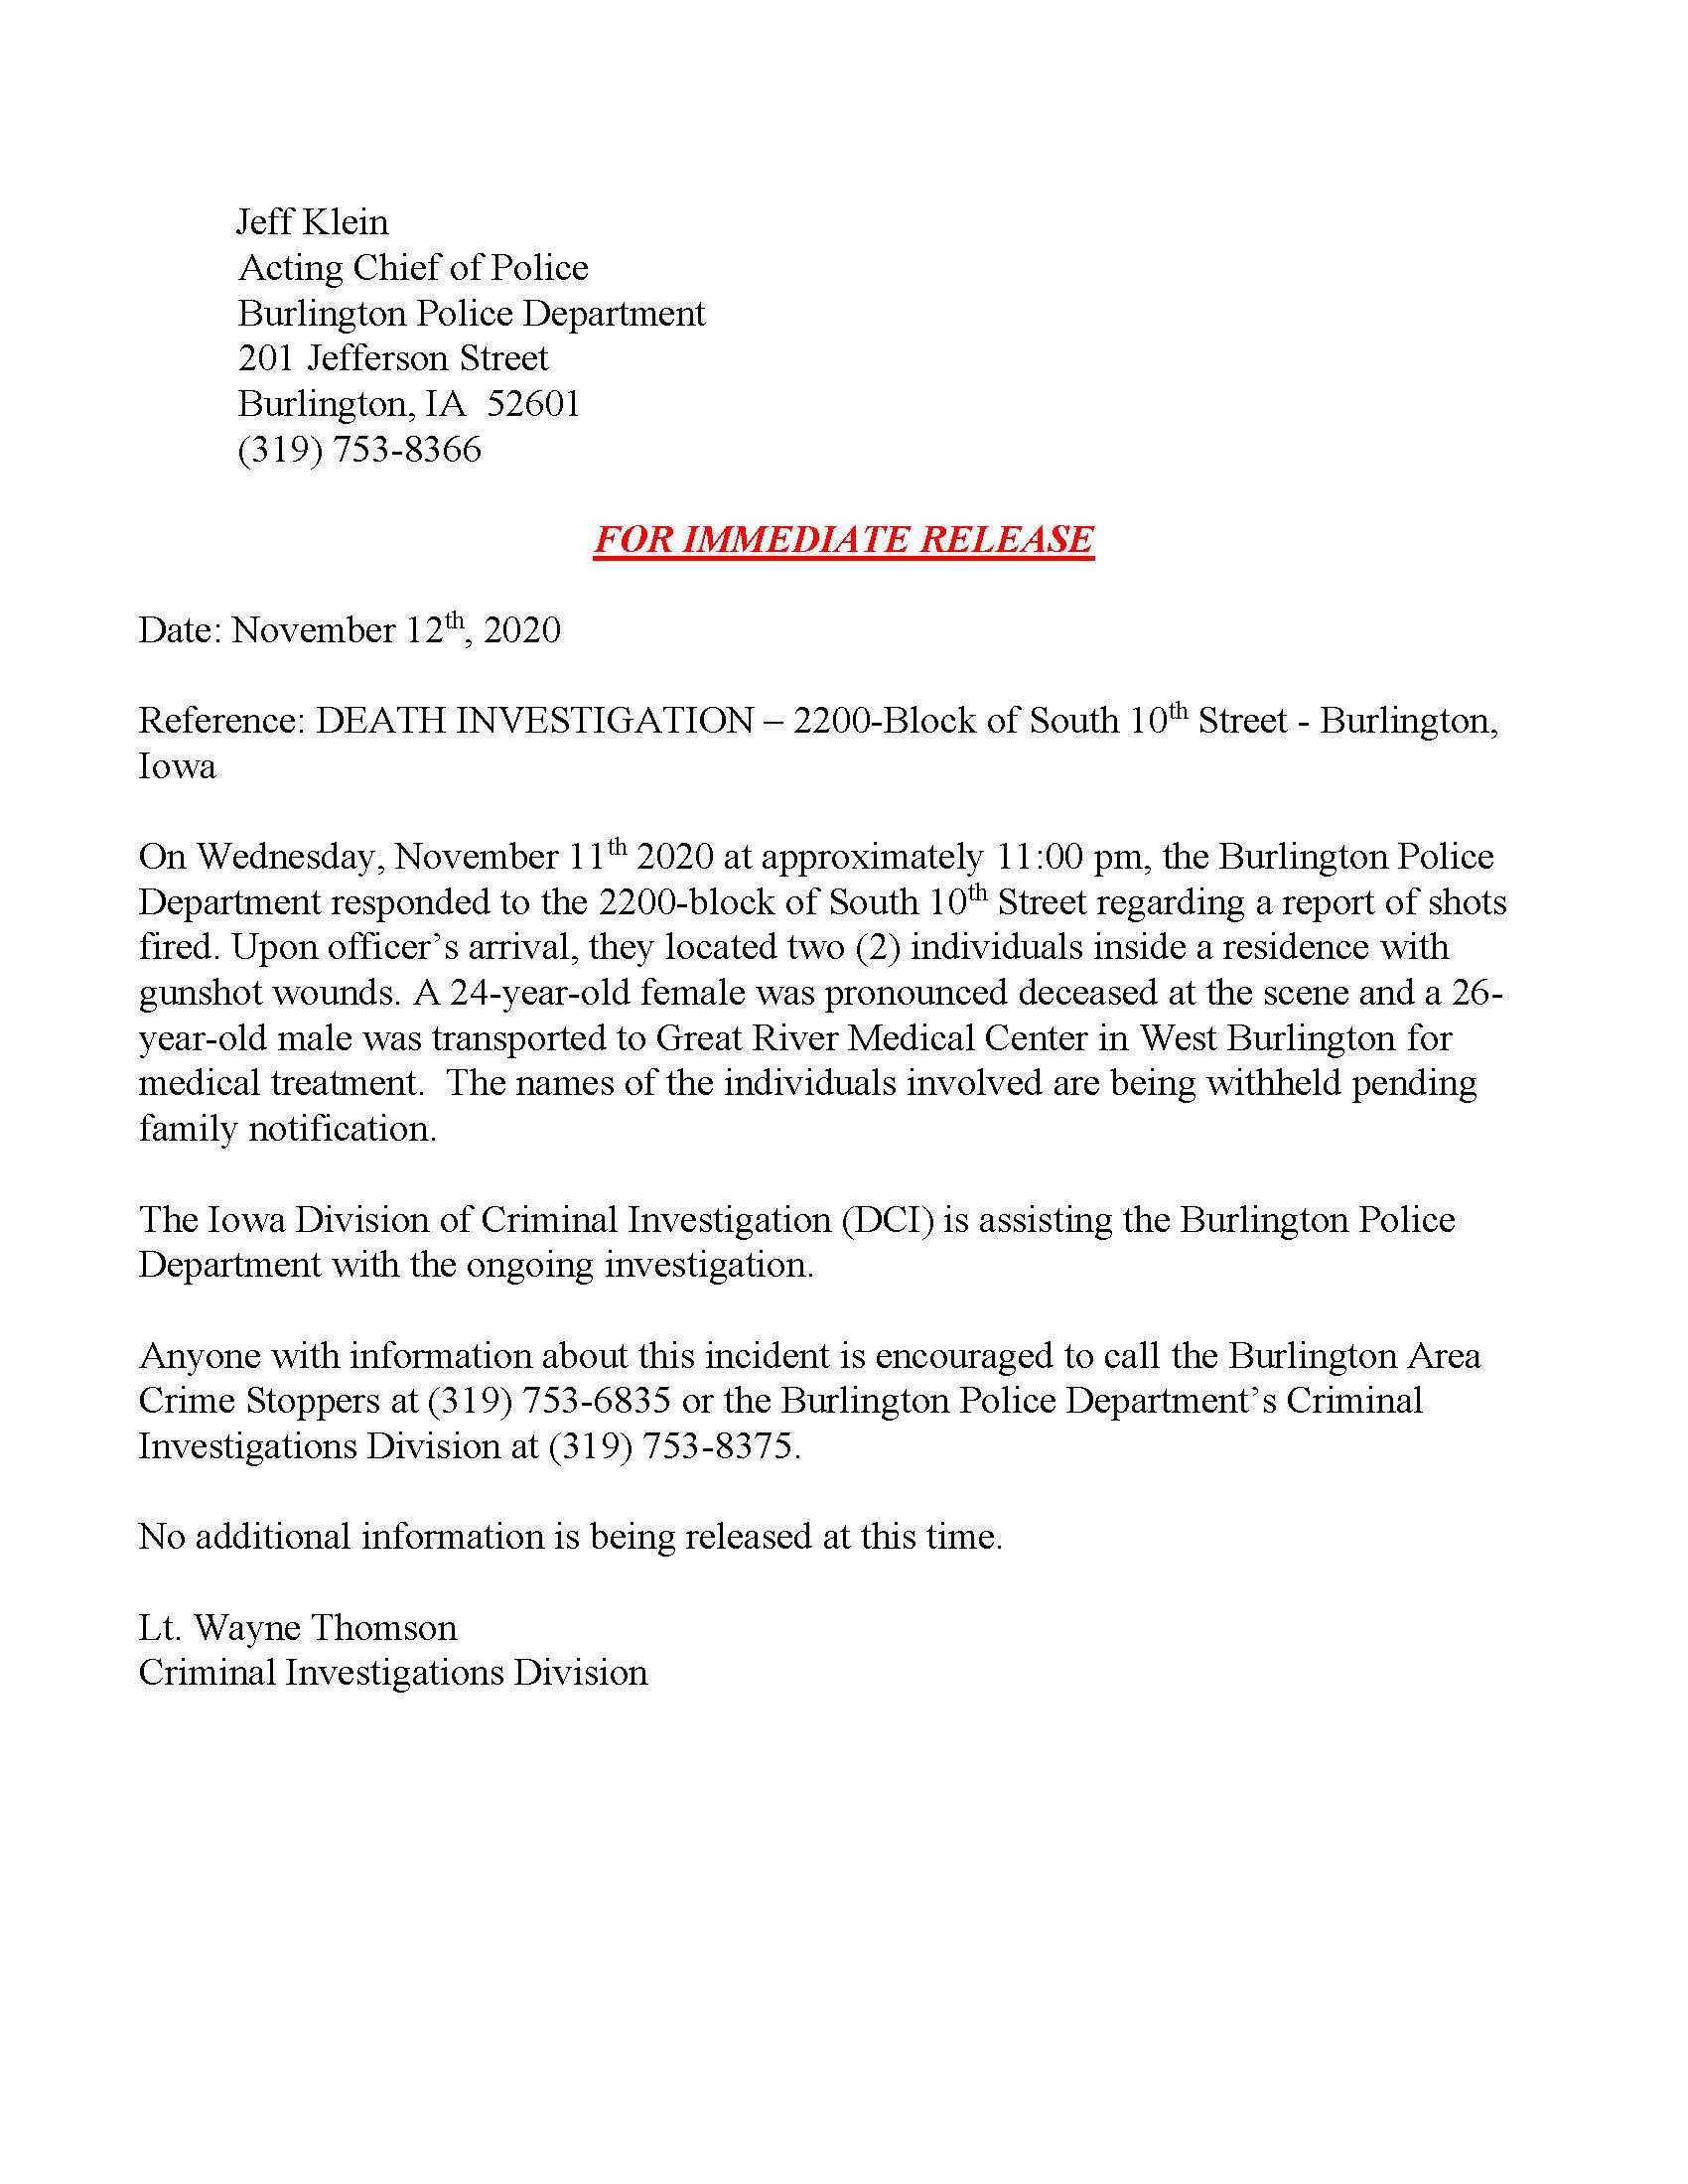 Link to Burlington press release